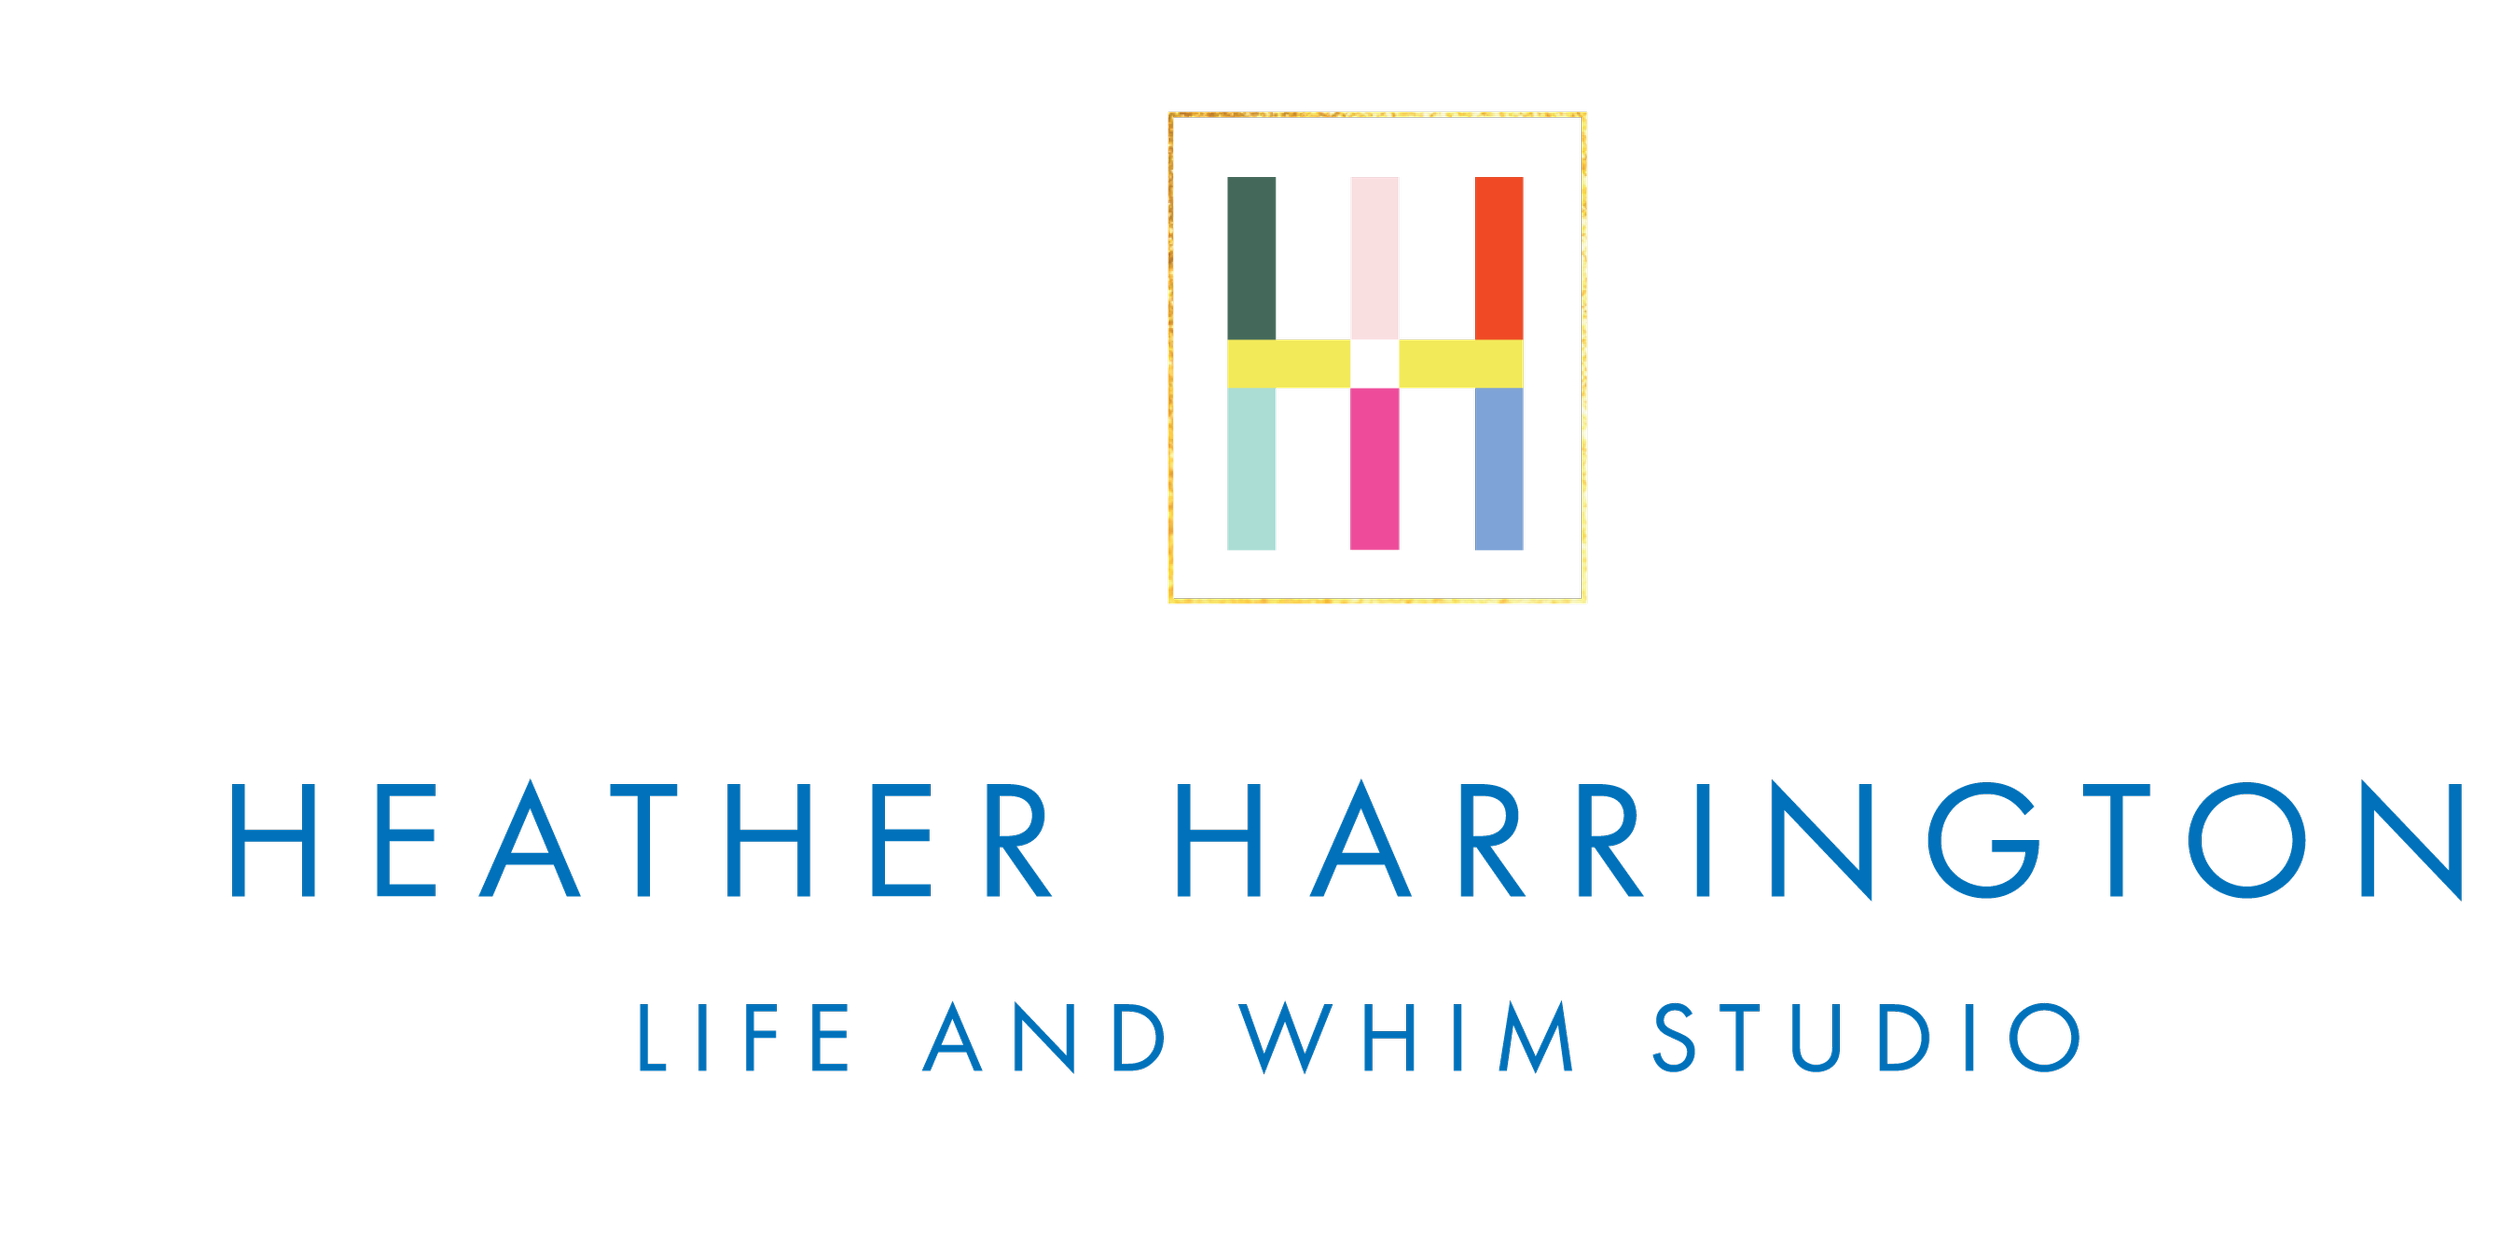 Life and Whim Studio by Heather Harrington